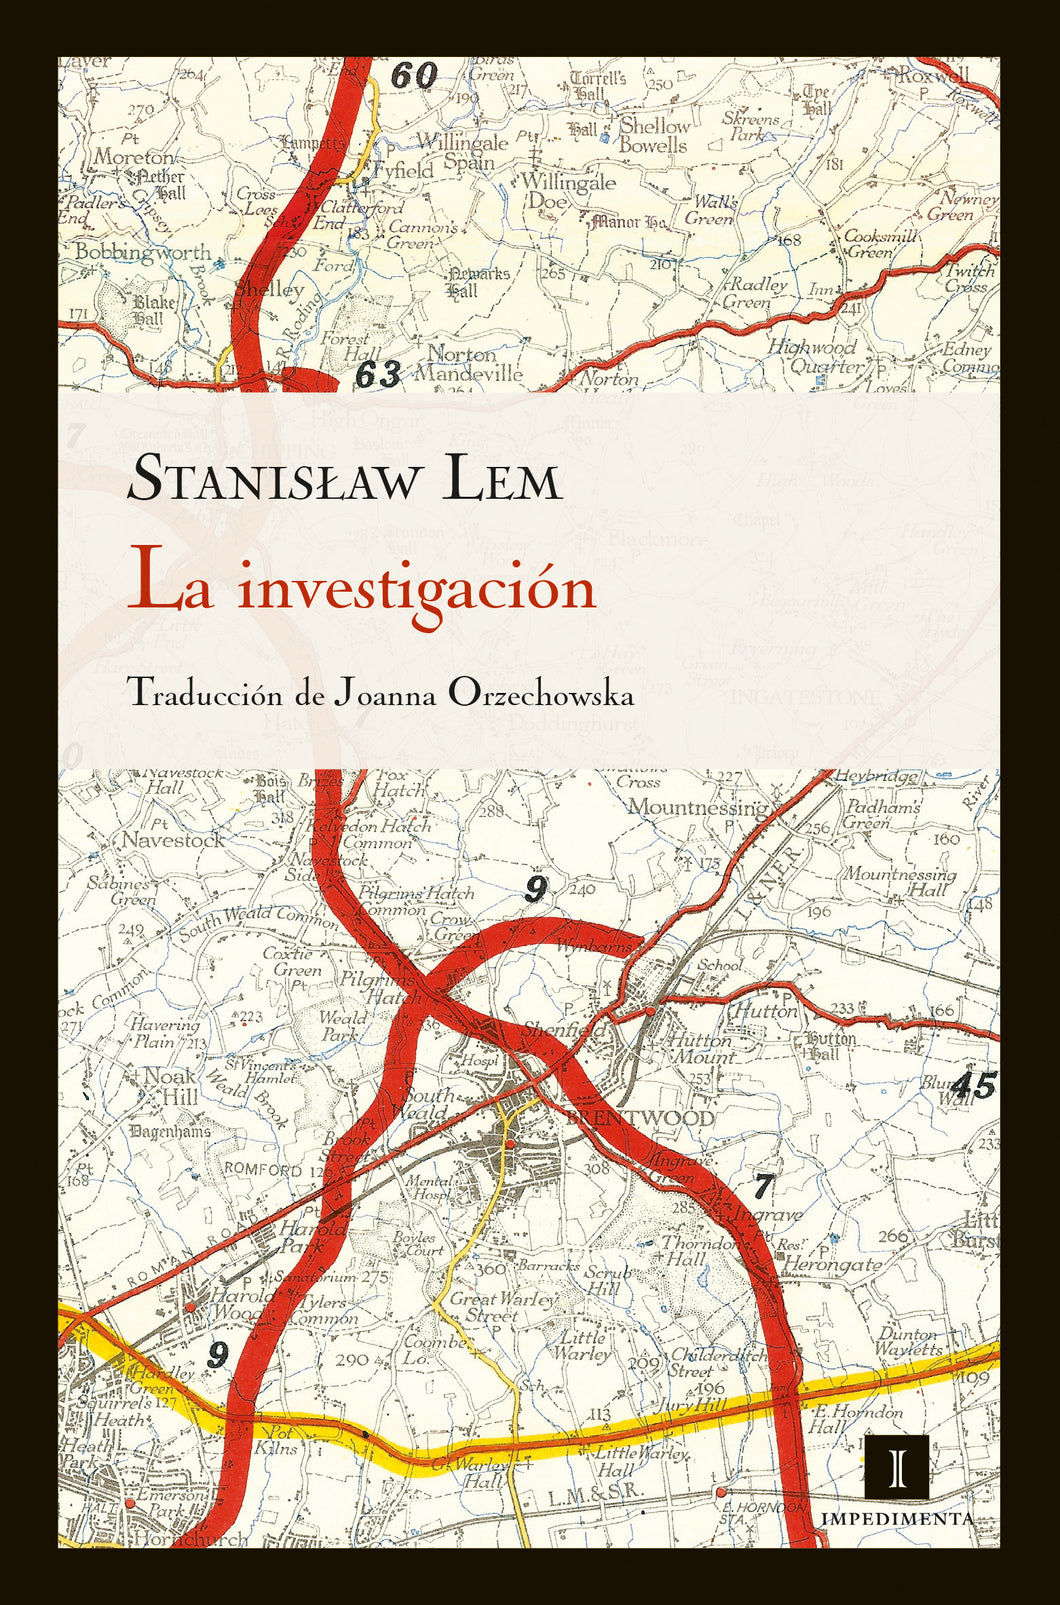 LA INVESTIGACIÓN - Stanislaw Lem